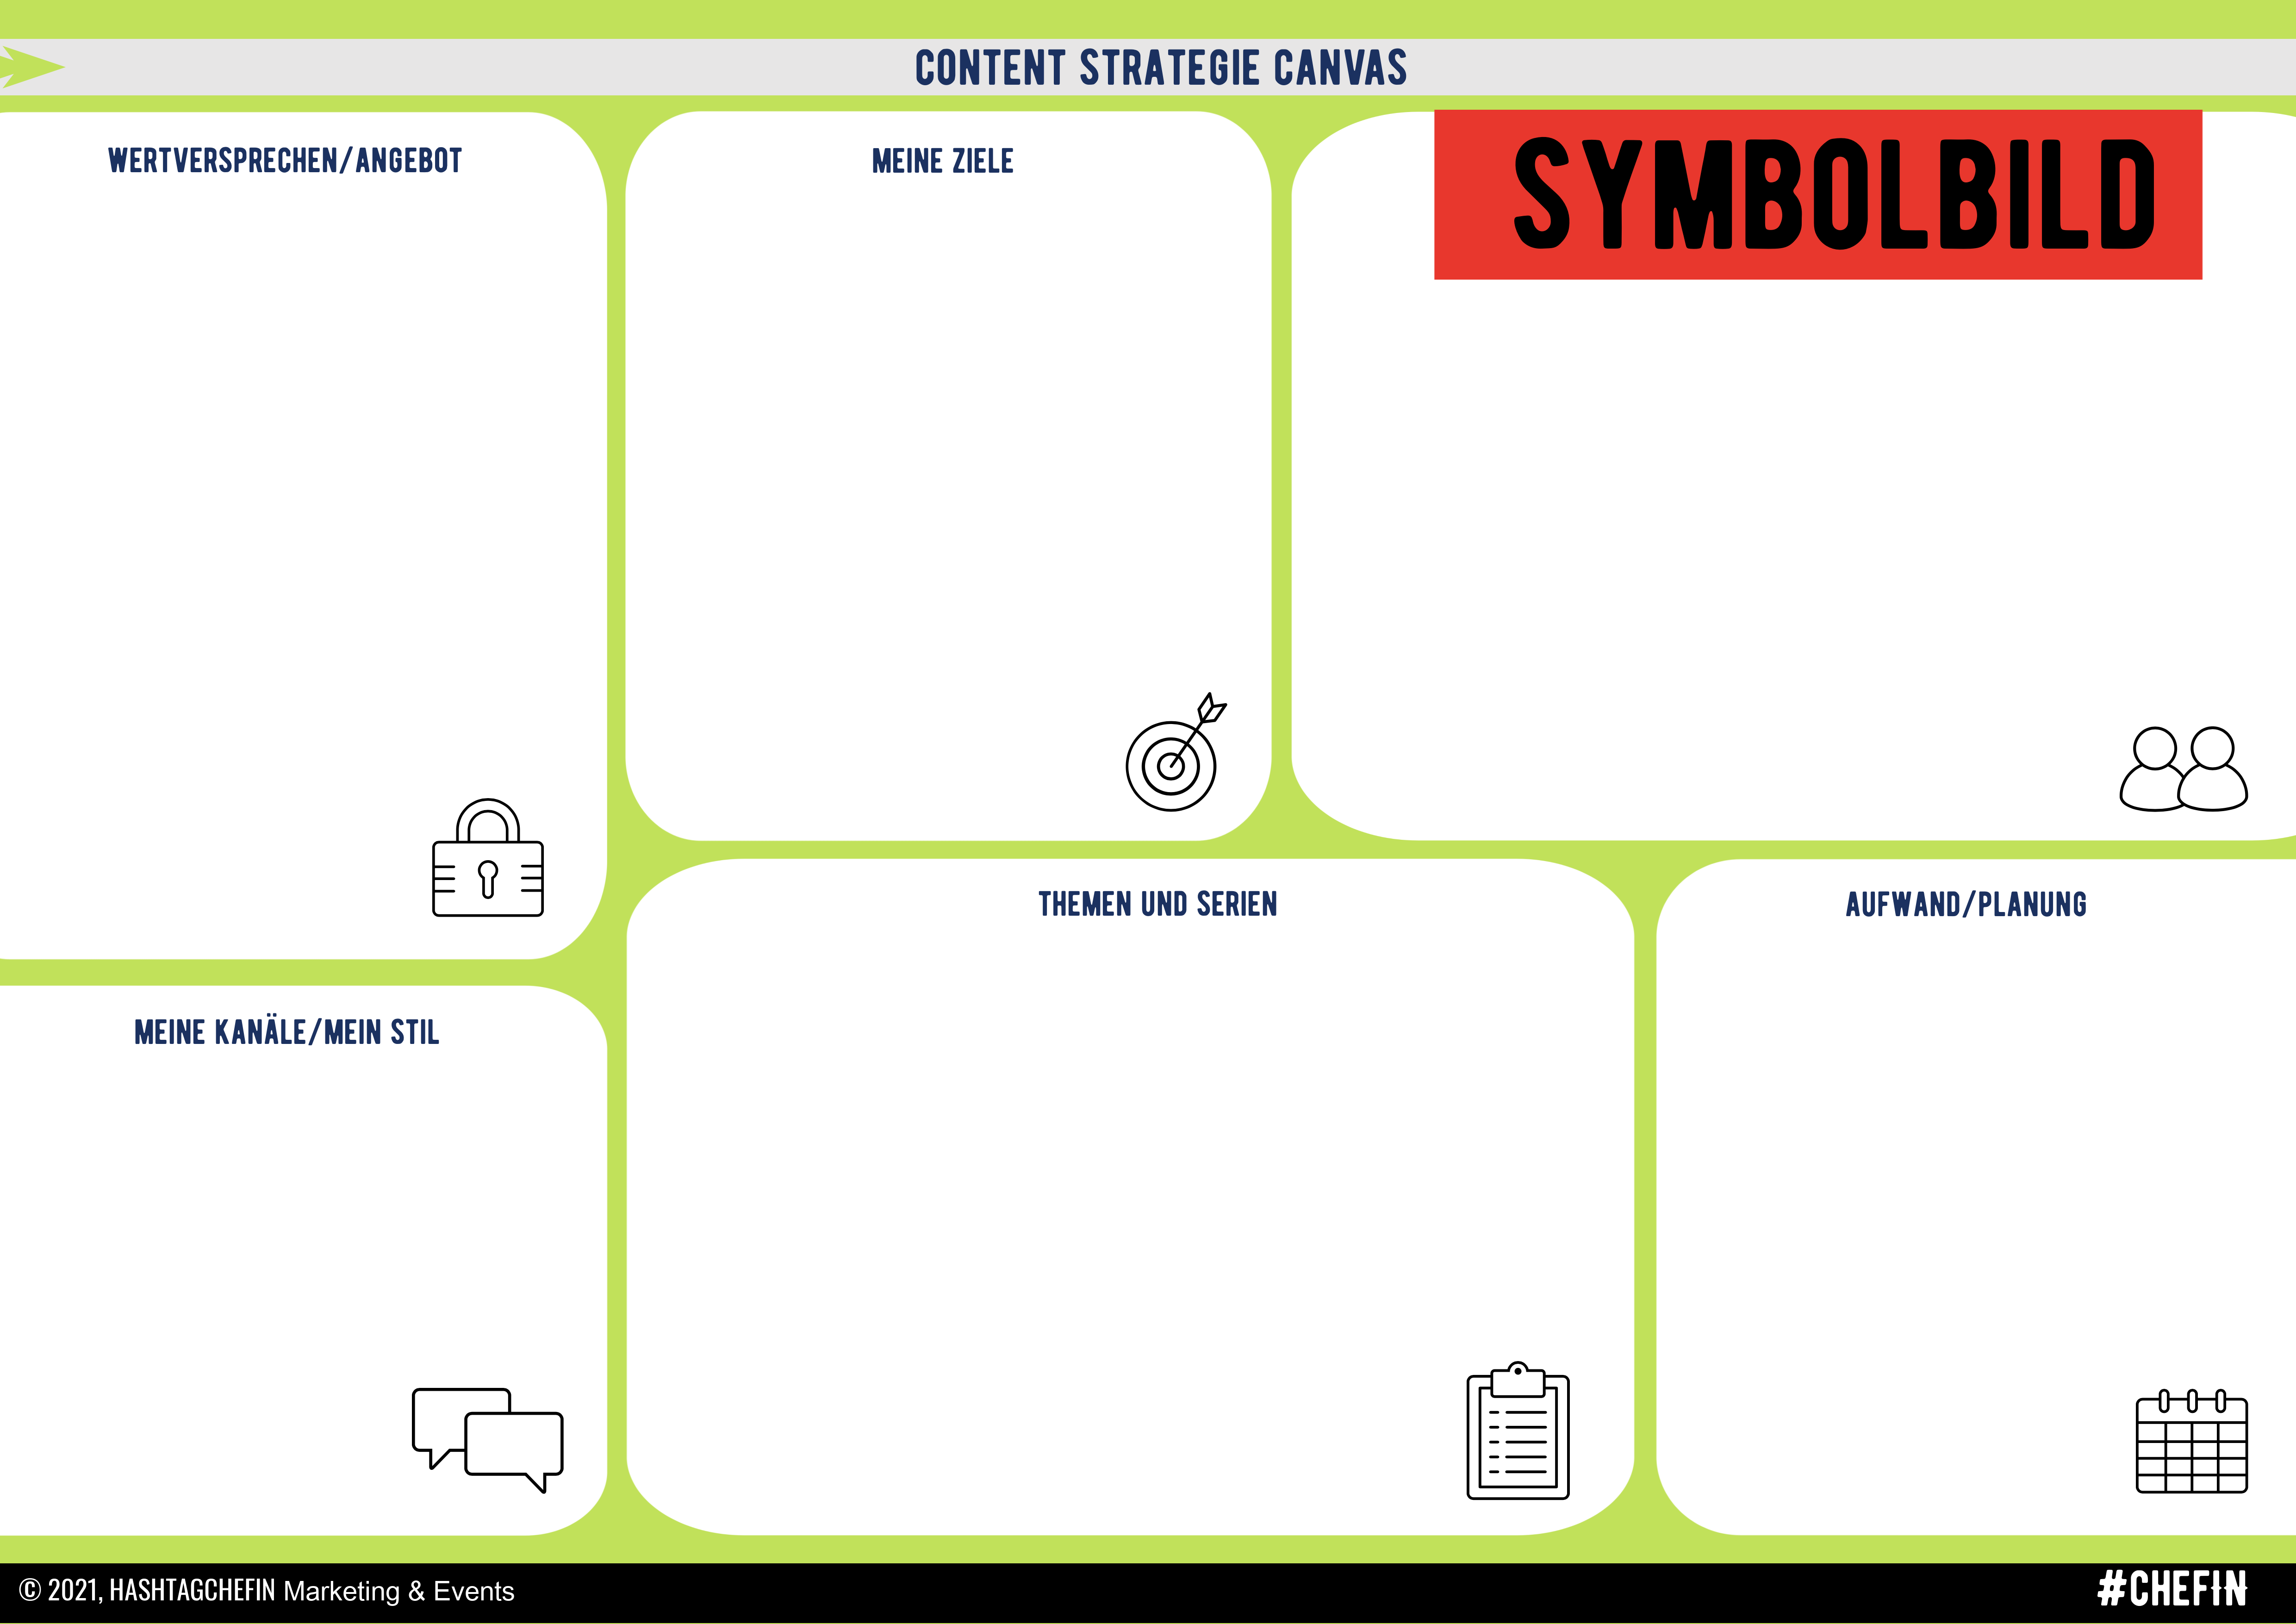 Content Strategie Canvas Plakat_10_21 Symbolbild